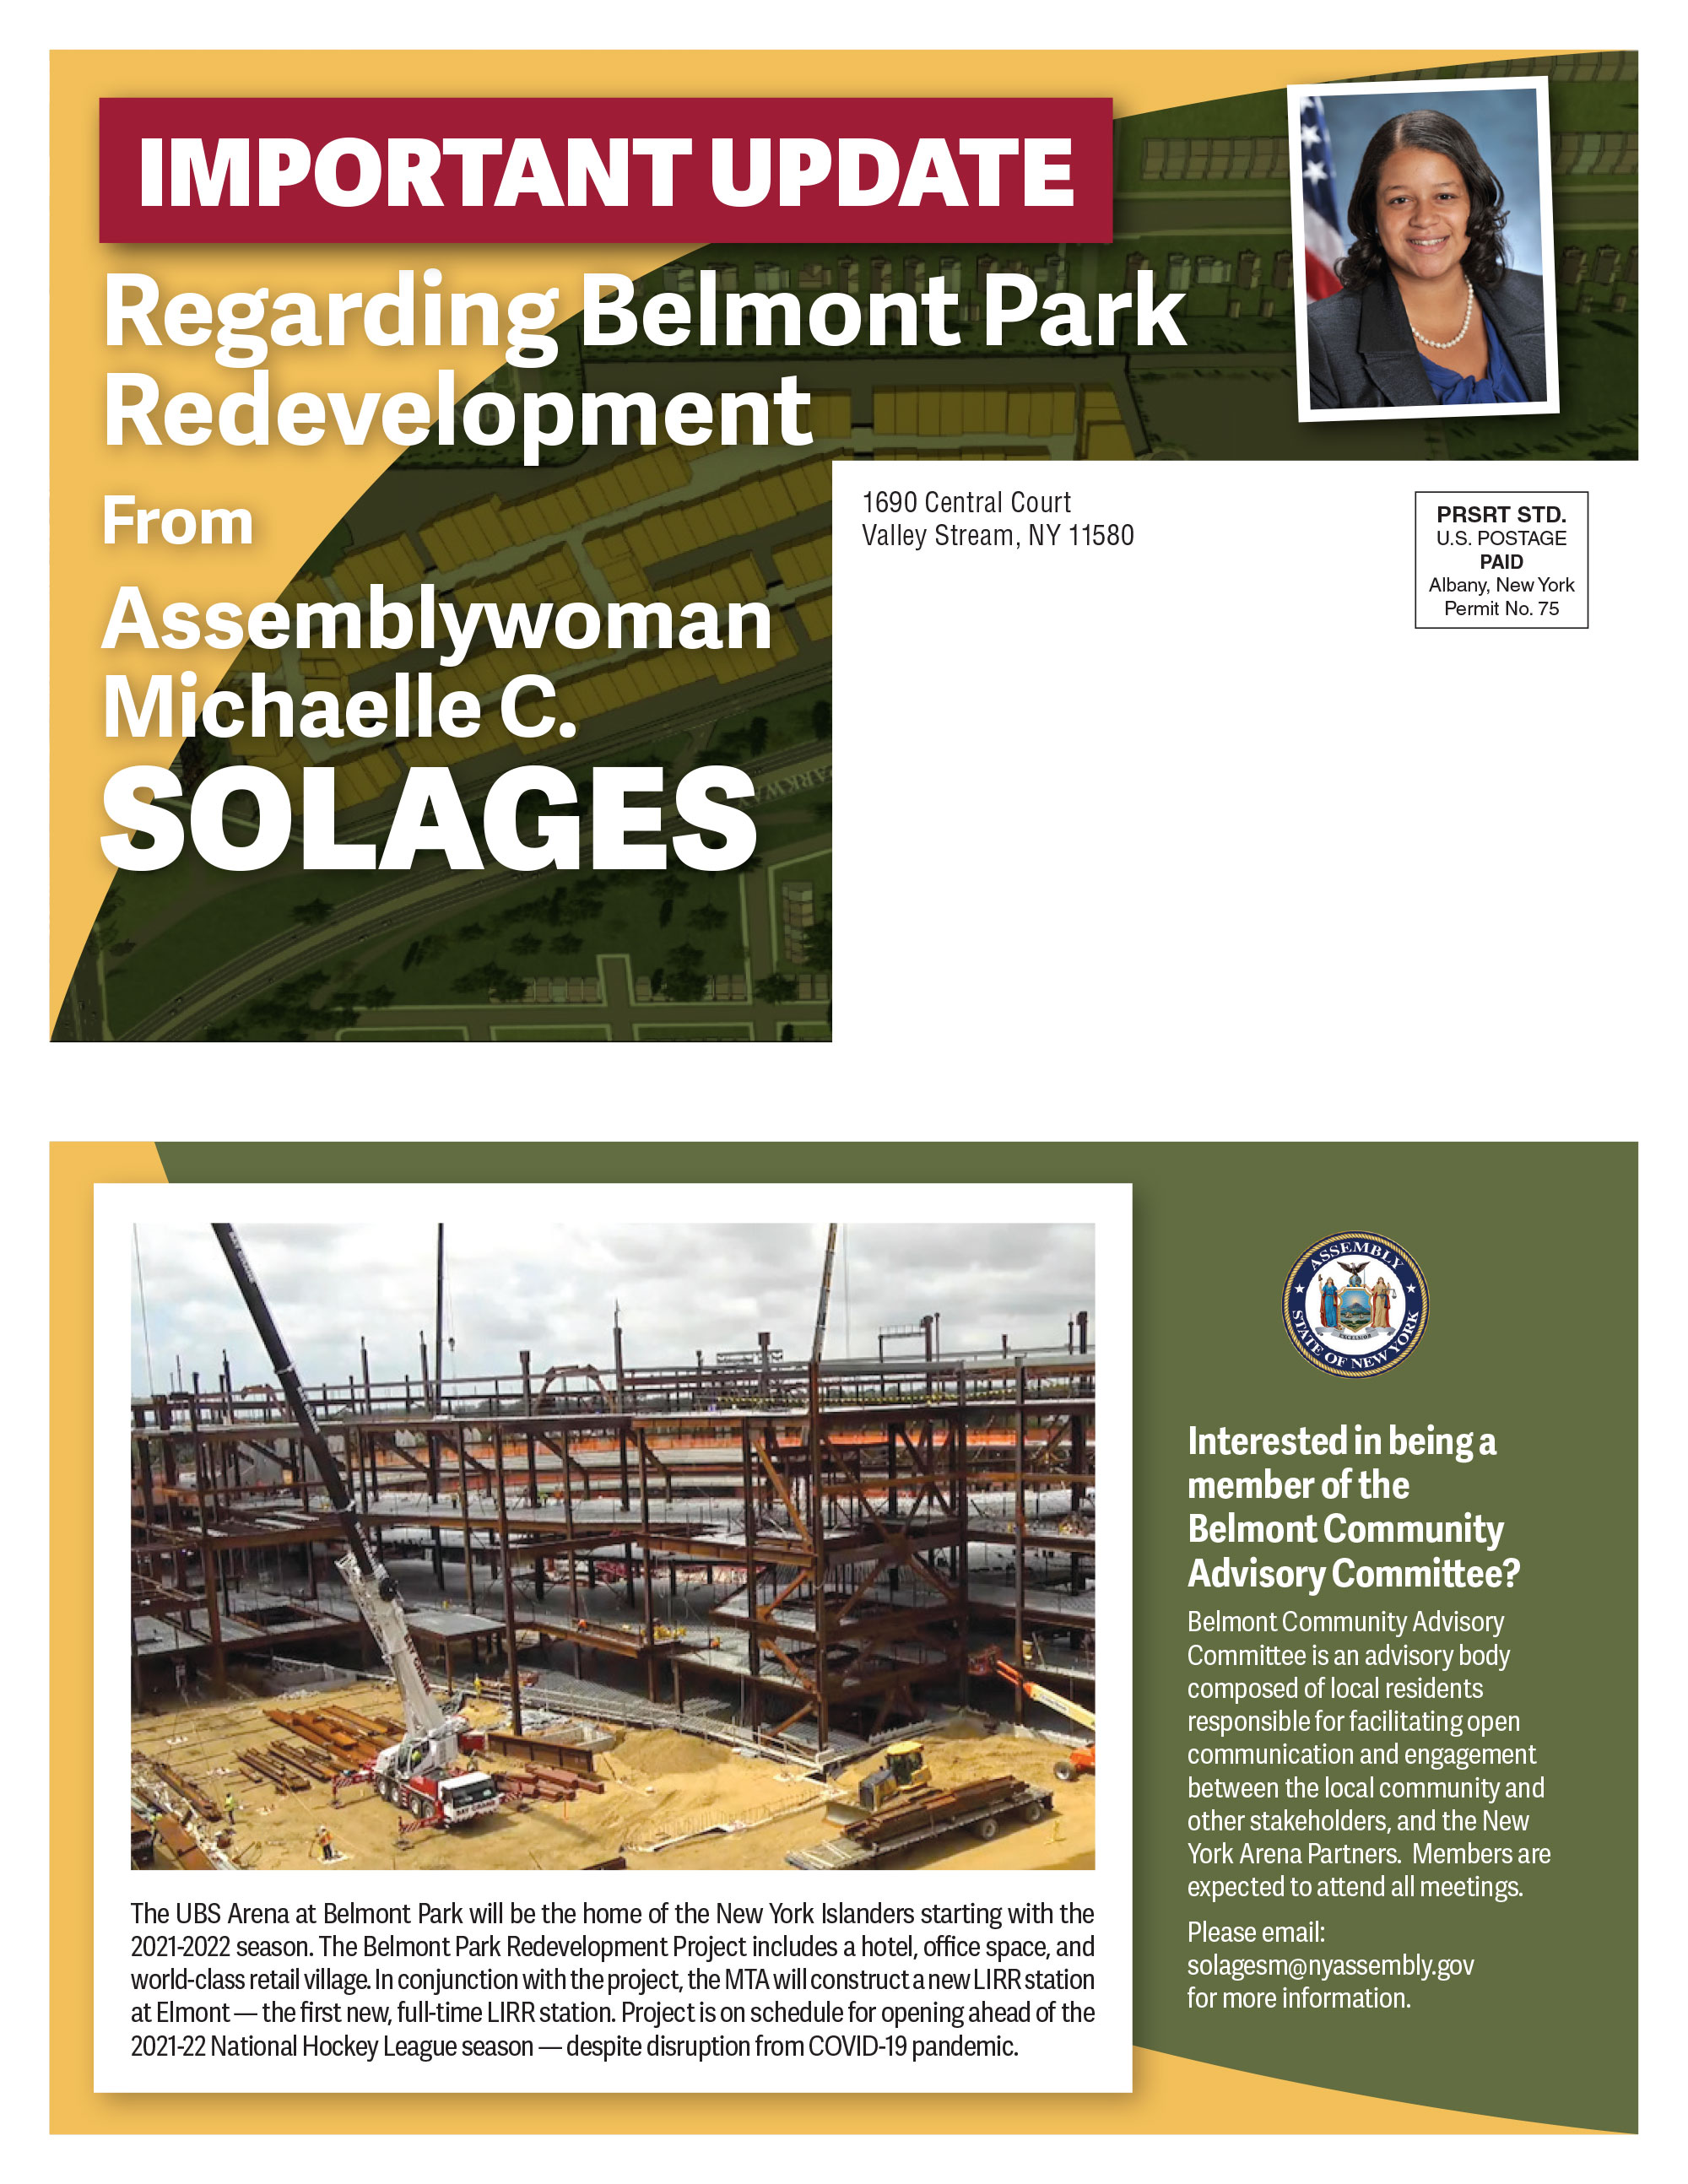 Important Update Regarding Belmont Park Redevelopment